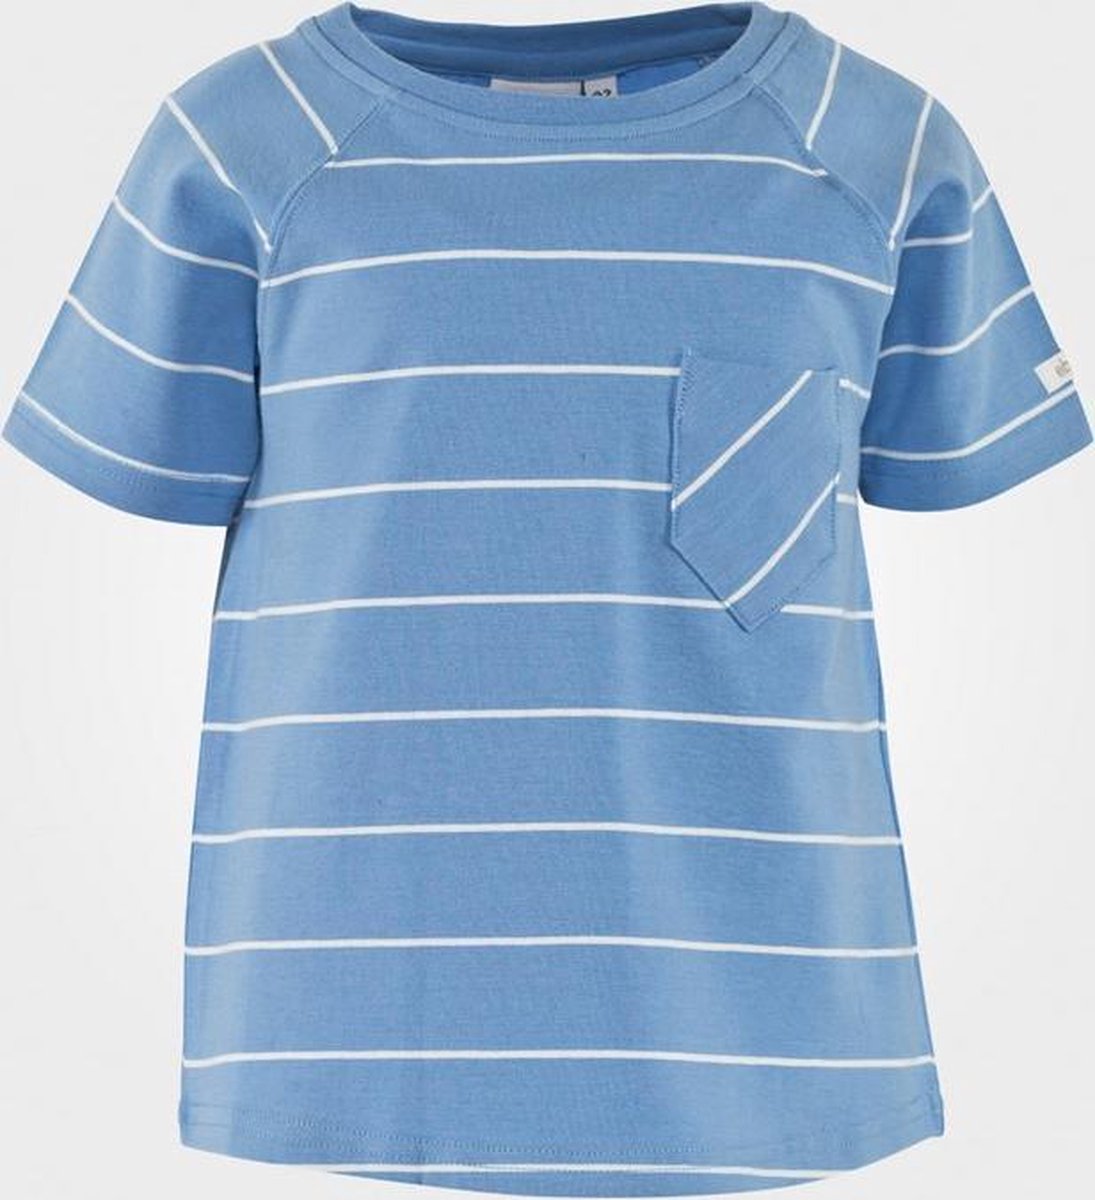 Ebbe Gram T-Shirt Sky Blue/Offwhite Short sleeve